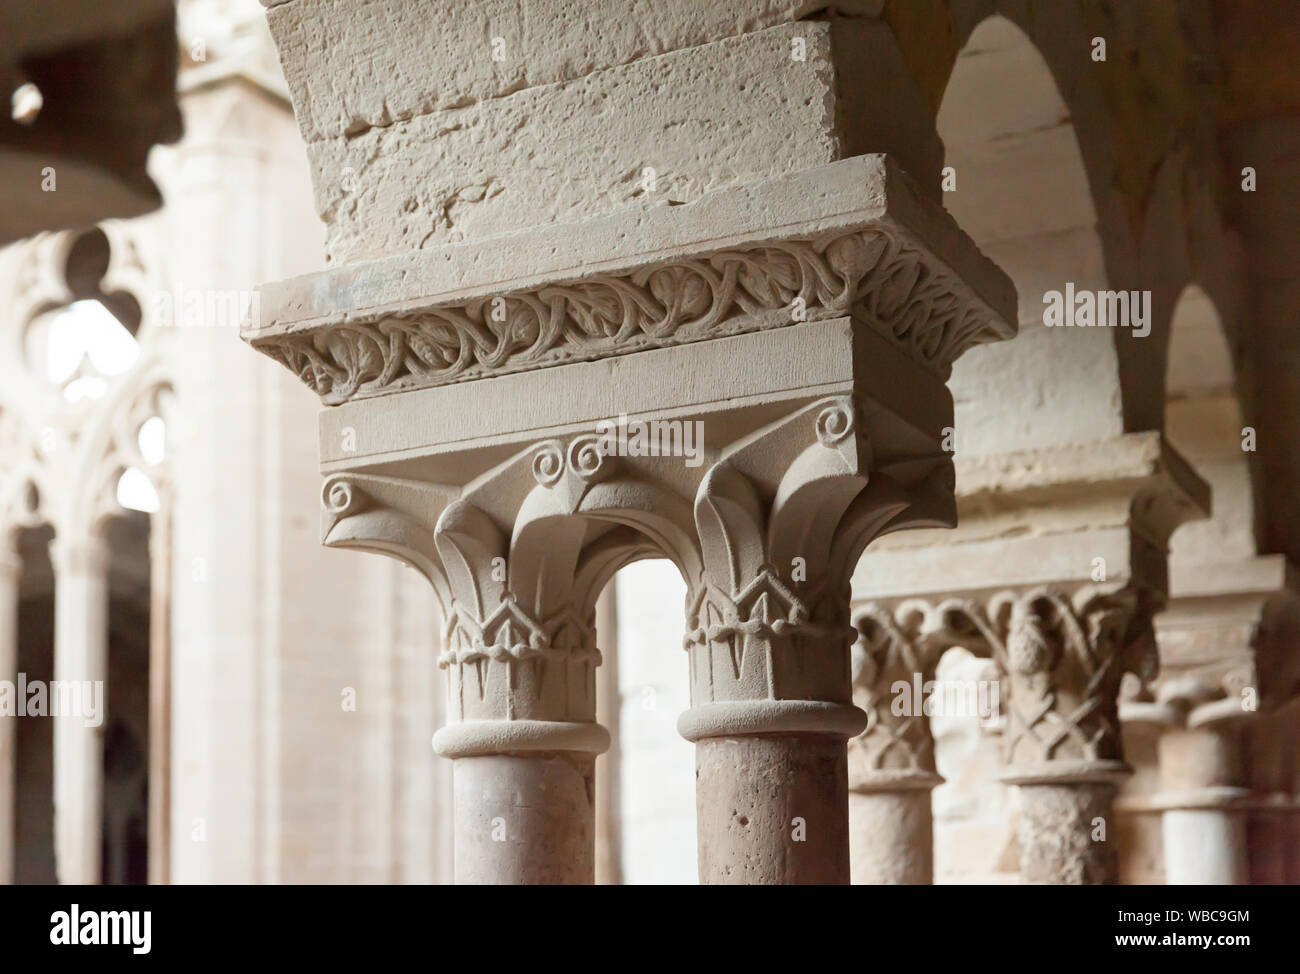 Closeup of details of decorative capitals of columns of cloister in Monastery of Santa Maria de Vallbona, Urgell, Catalonia, Spain Stock Photo